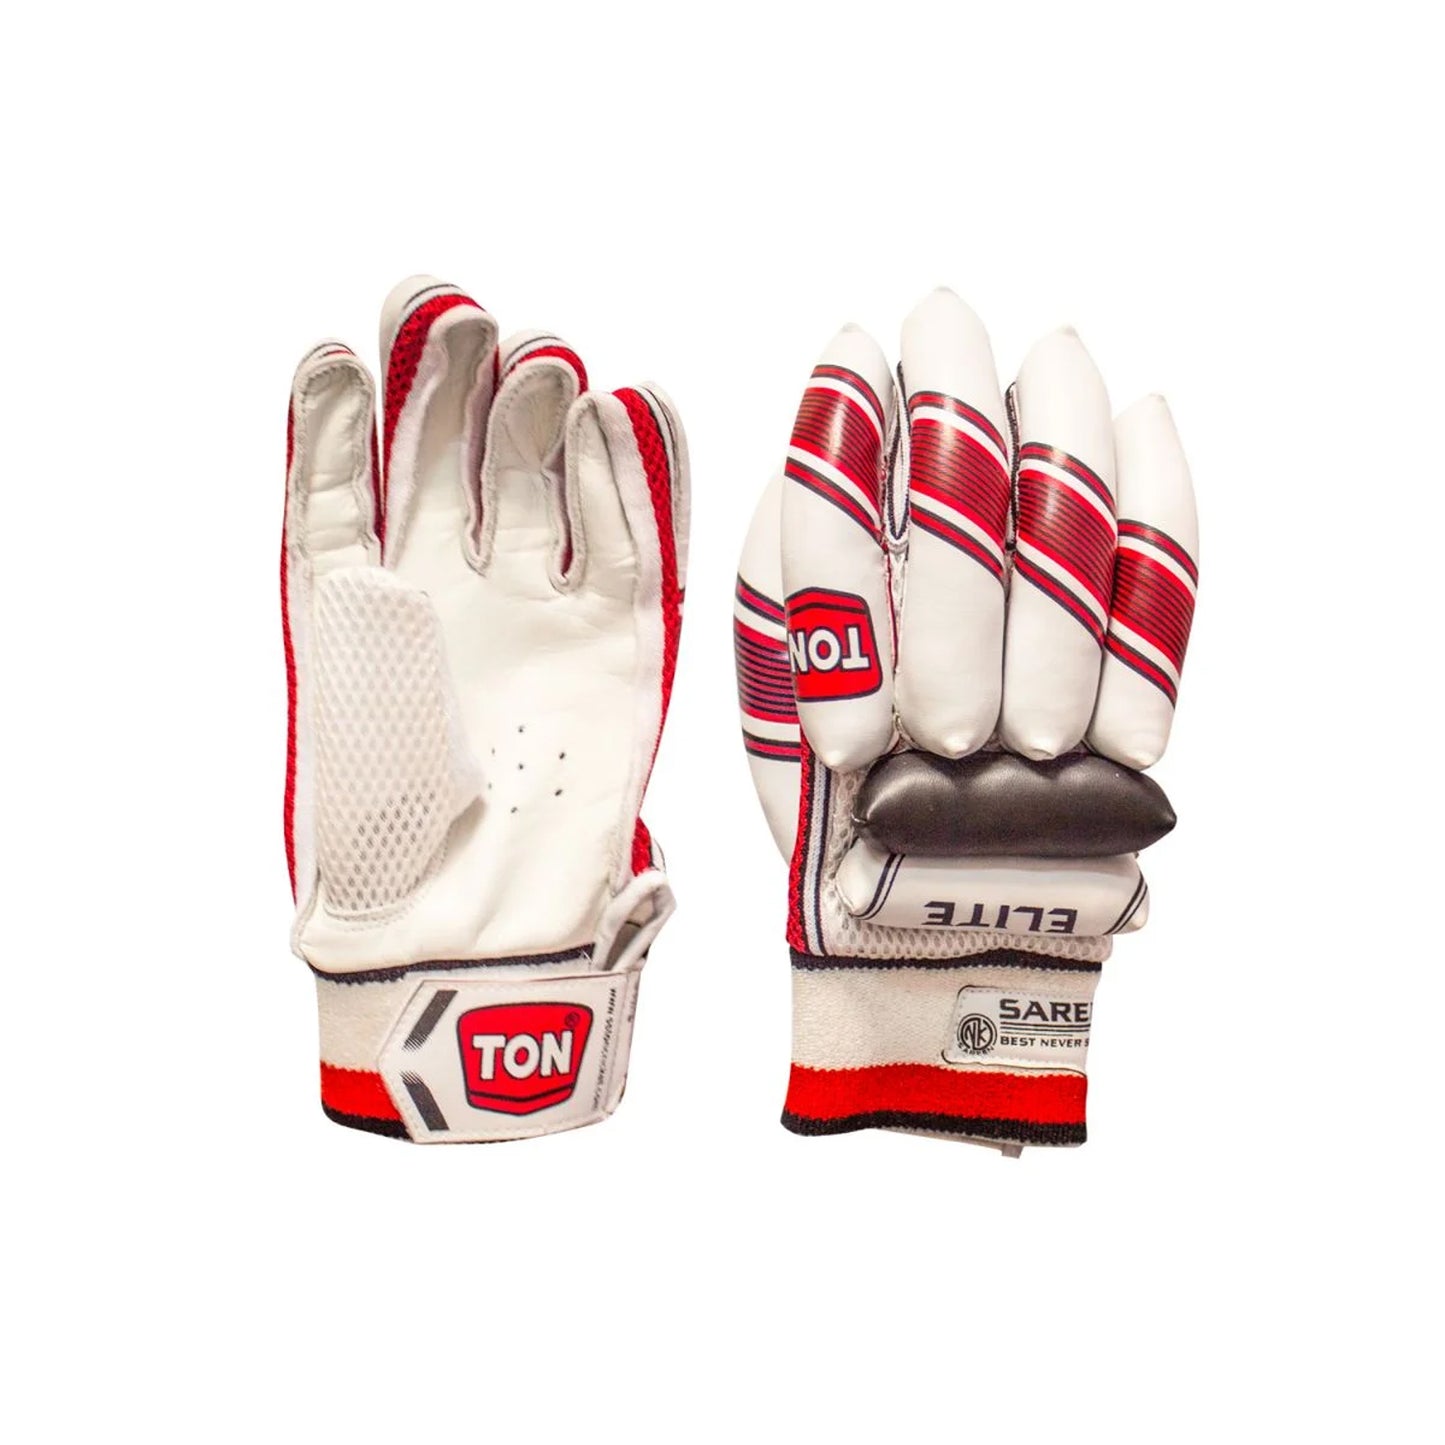 SS Ton Elite RH Batting Gloves - Best Price online Prokicksports.com